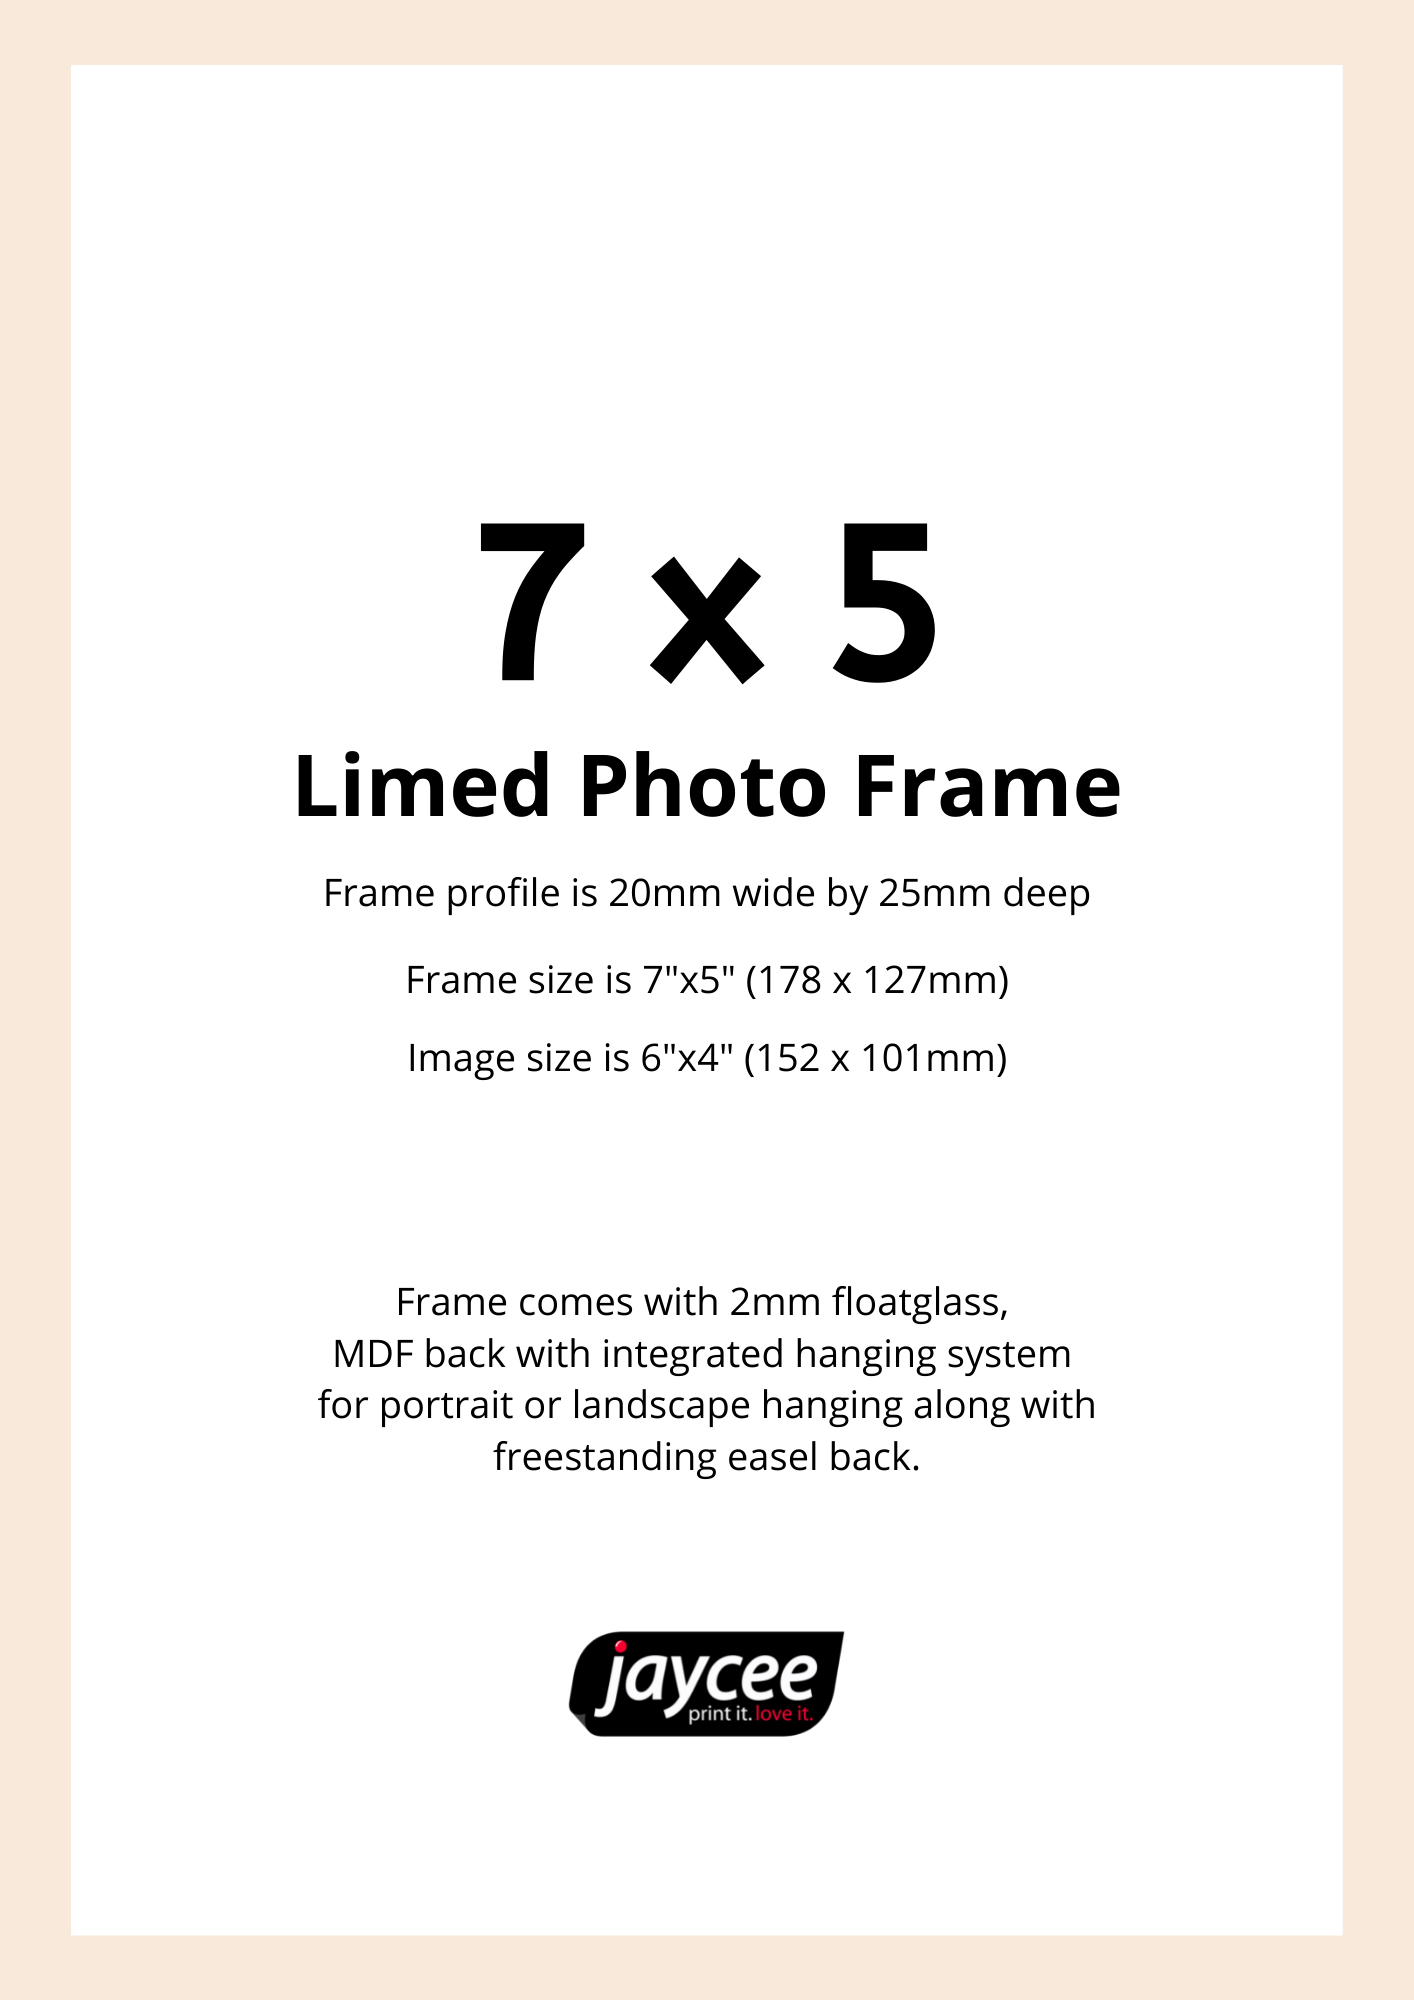 7x5 Limed Photo Frame - Jaycee